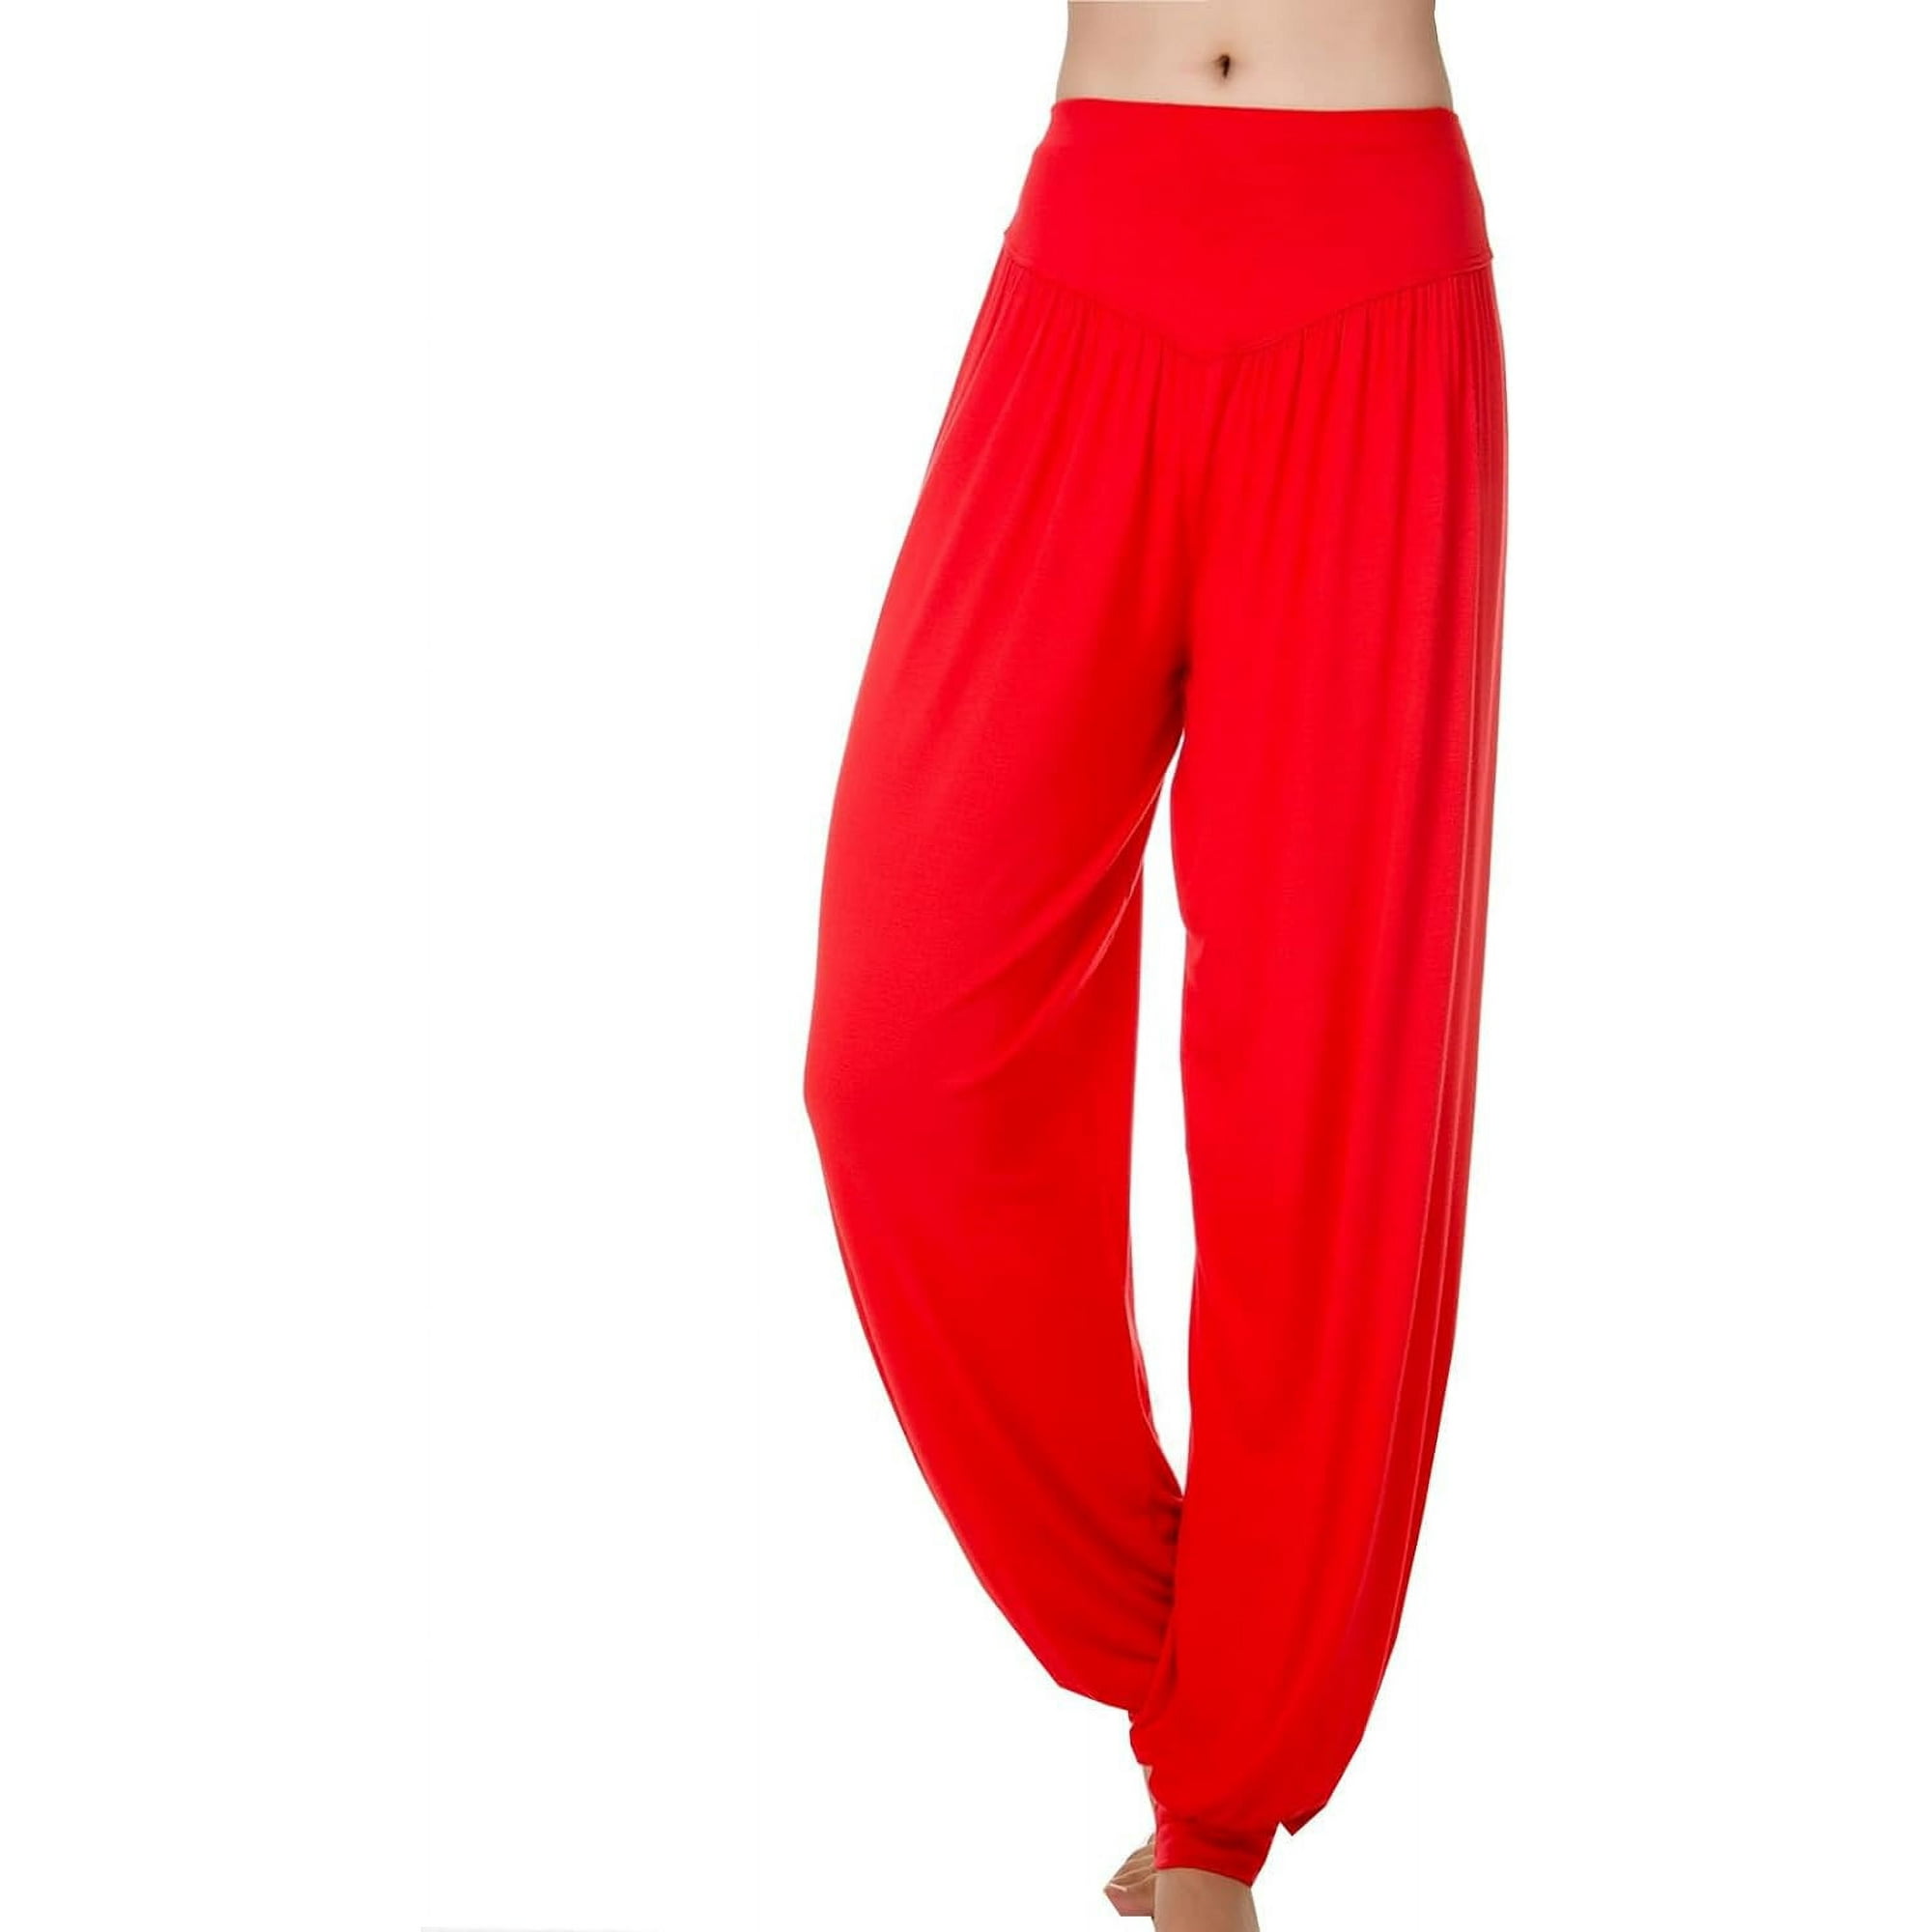 Pantalones de yoga fluidos para mujer - Pantalones harén de yoga